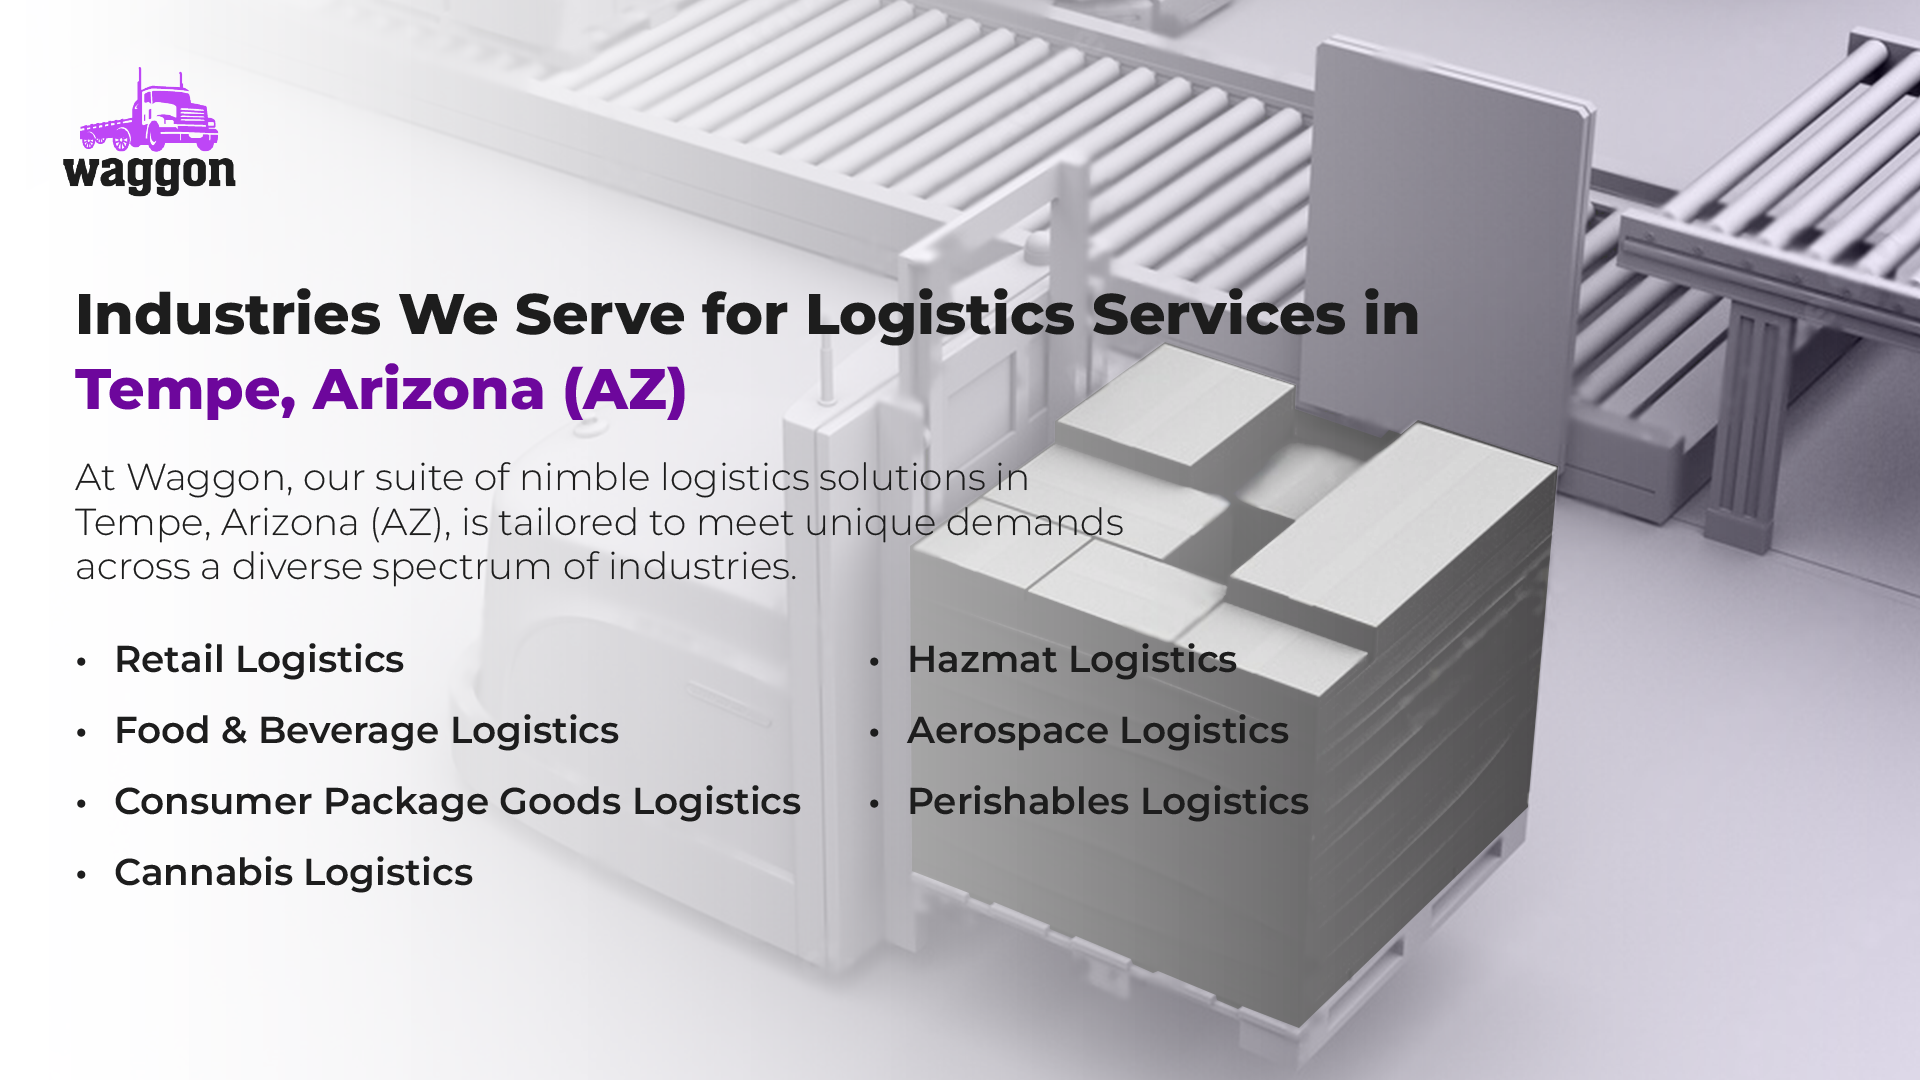 Industries We Serve for Logistics Services in Tempe, Arizona (AZ)